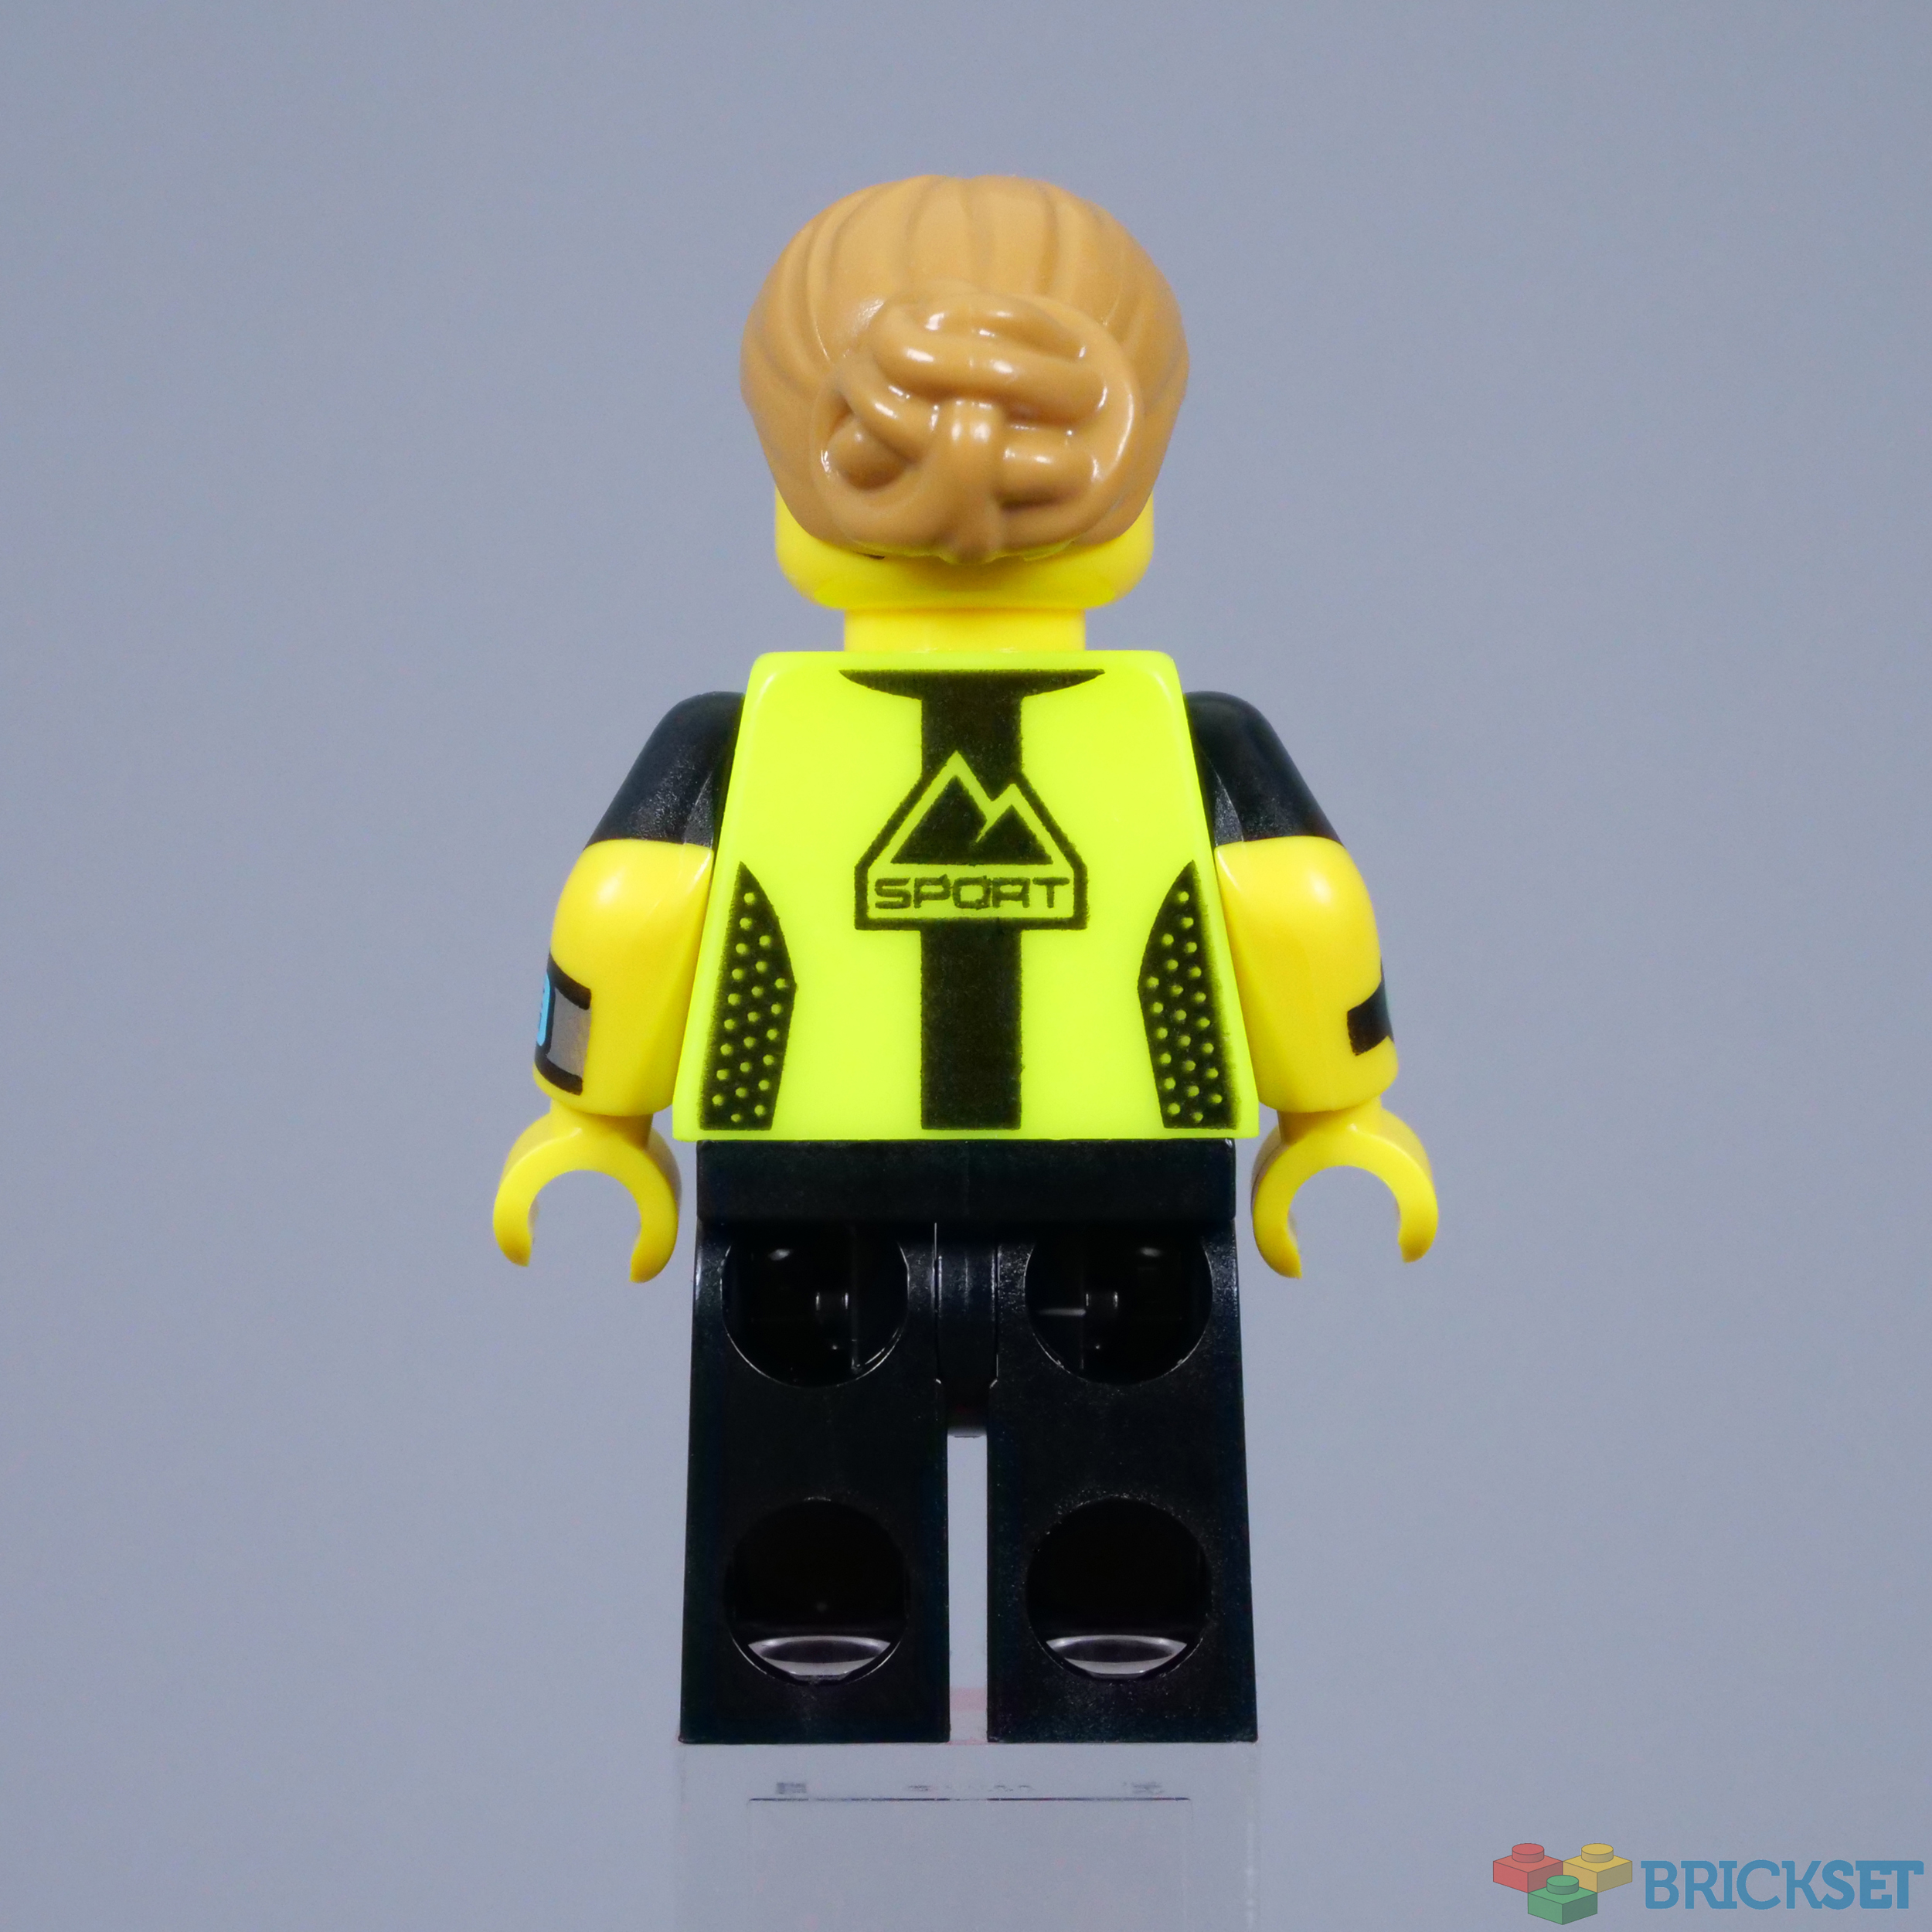 LEGO 71037 Complete Set of 12 MINIFIGURES SERIES 24 – Minifigures Plus